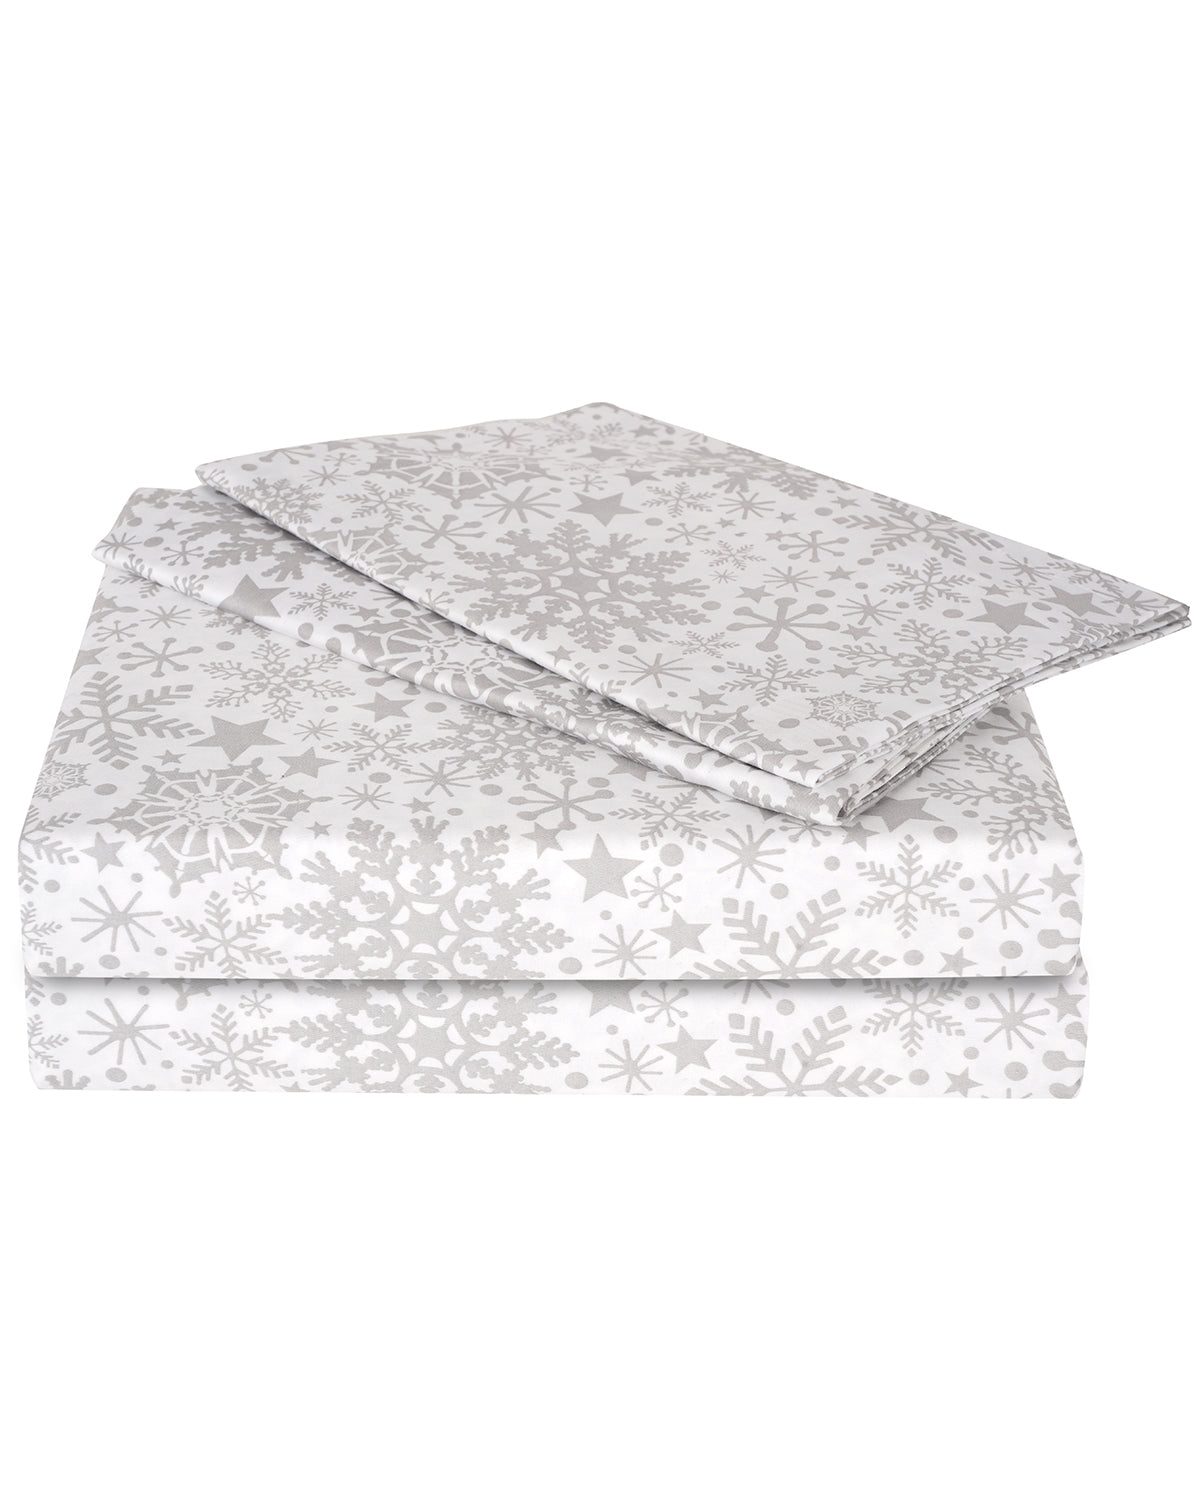 Swaas 100% Pure Cotton Snow Flake White/Grey Bedsheet Set - hfnl!fe